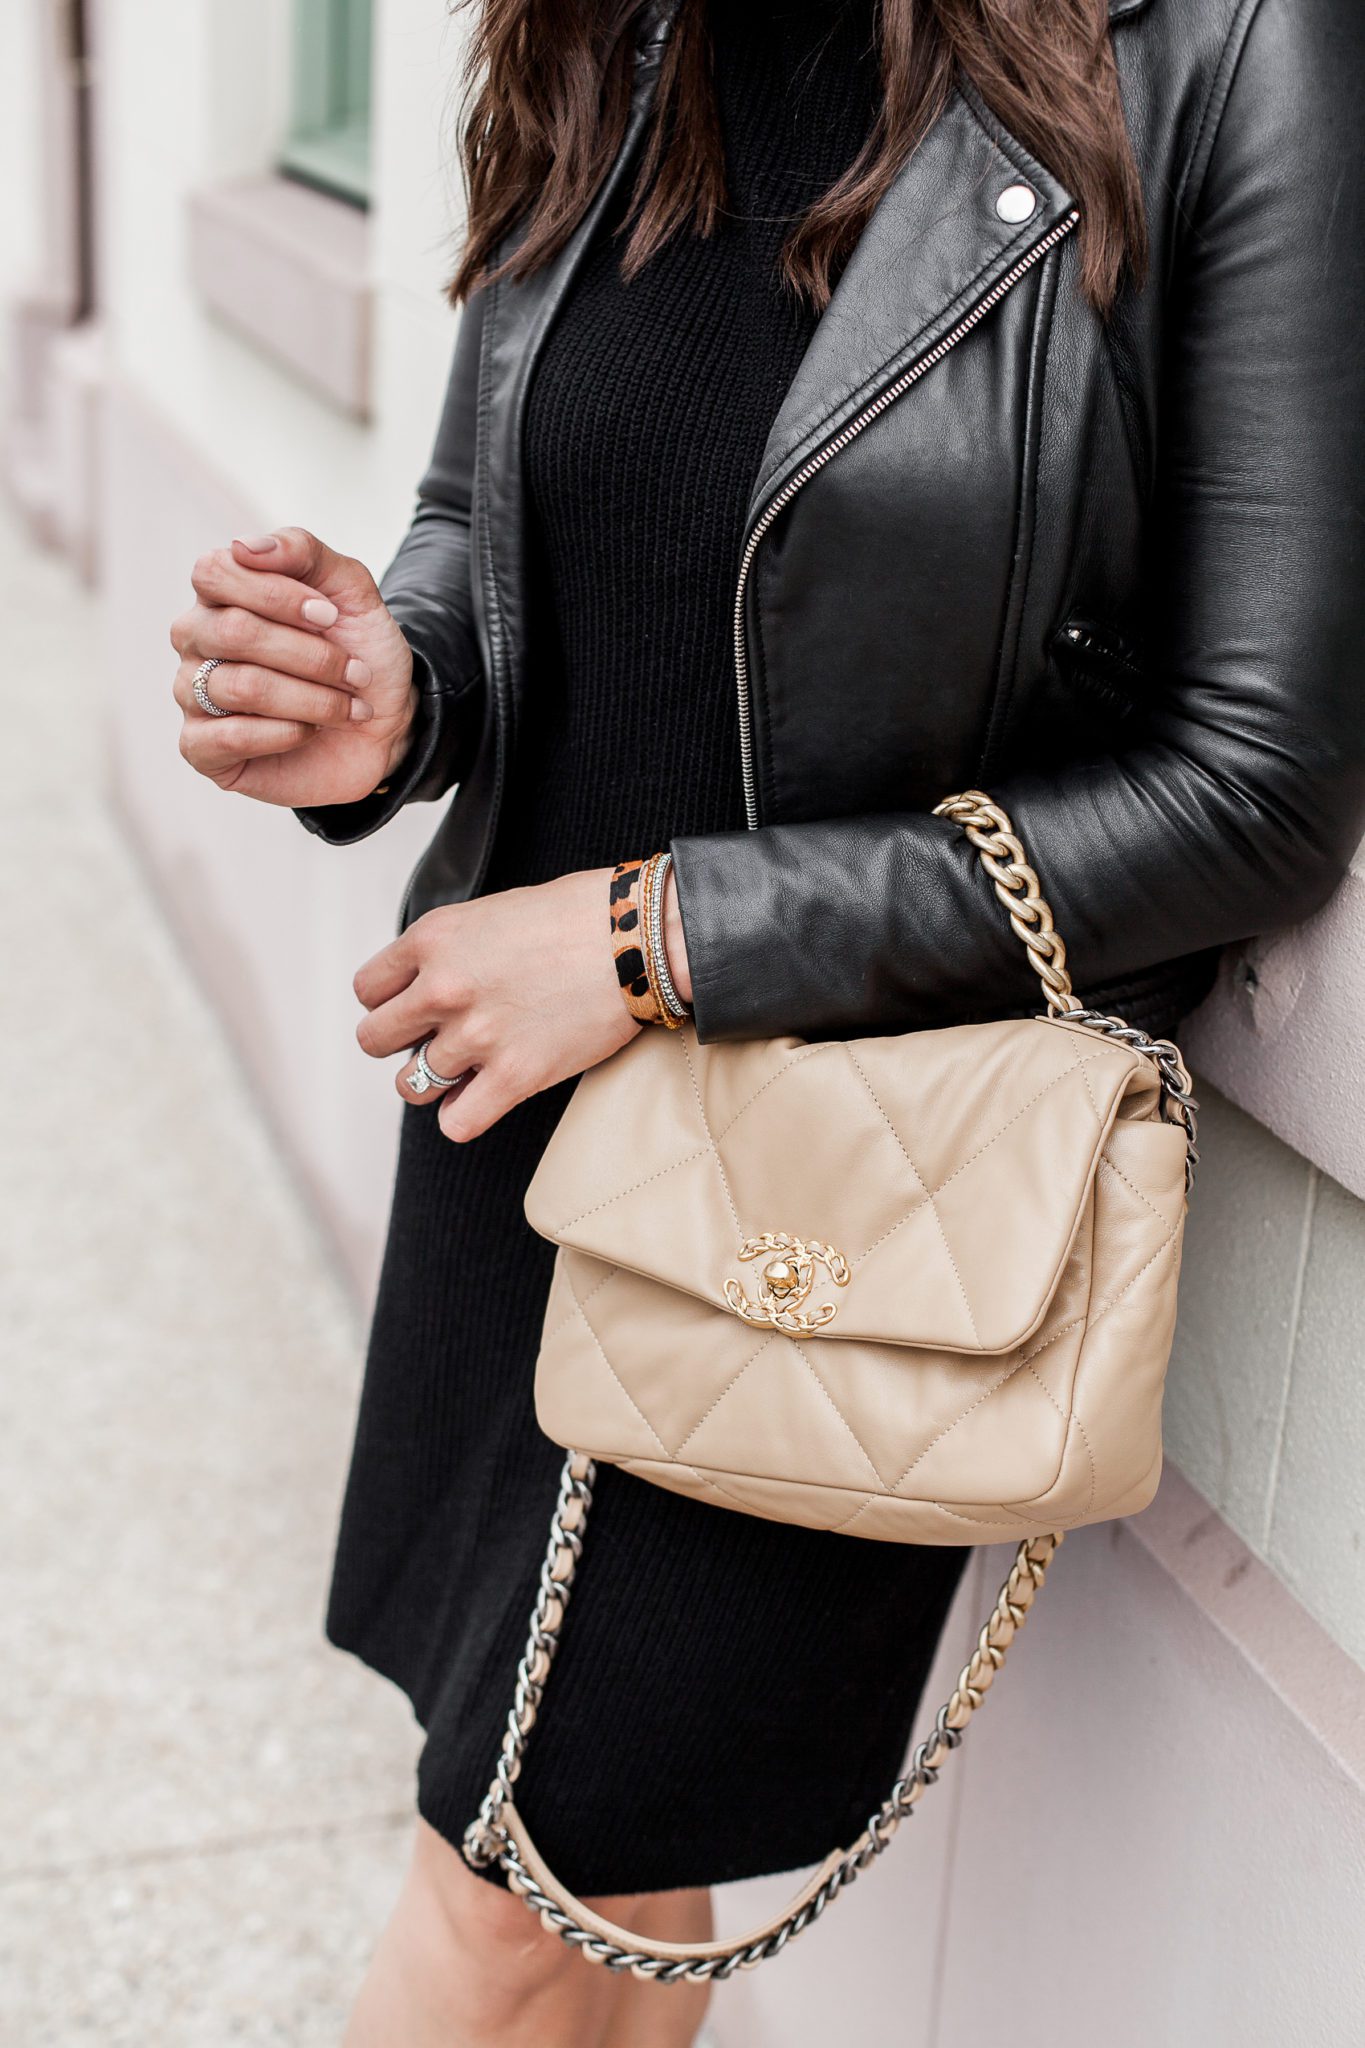 chanel black handbag chain strap shoulder